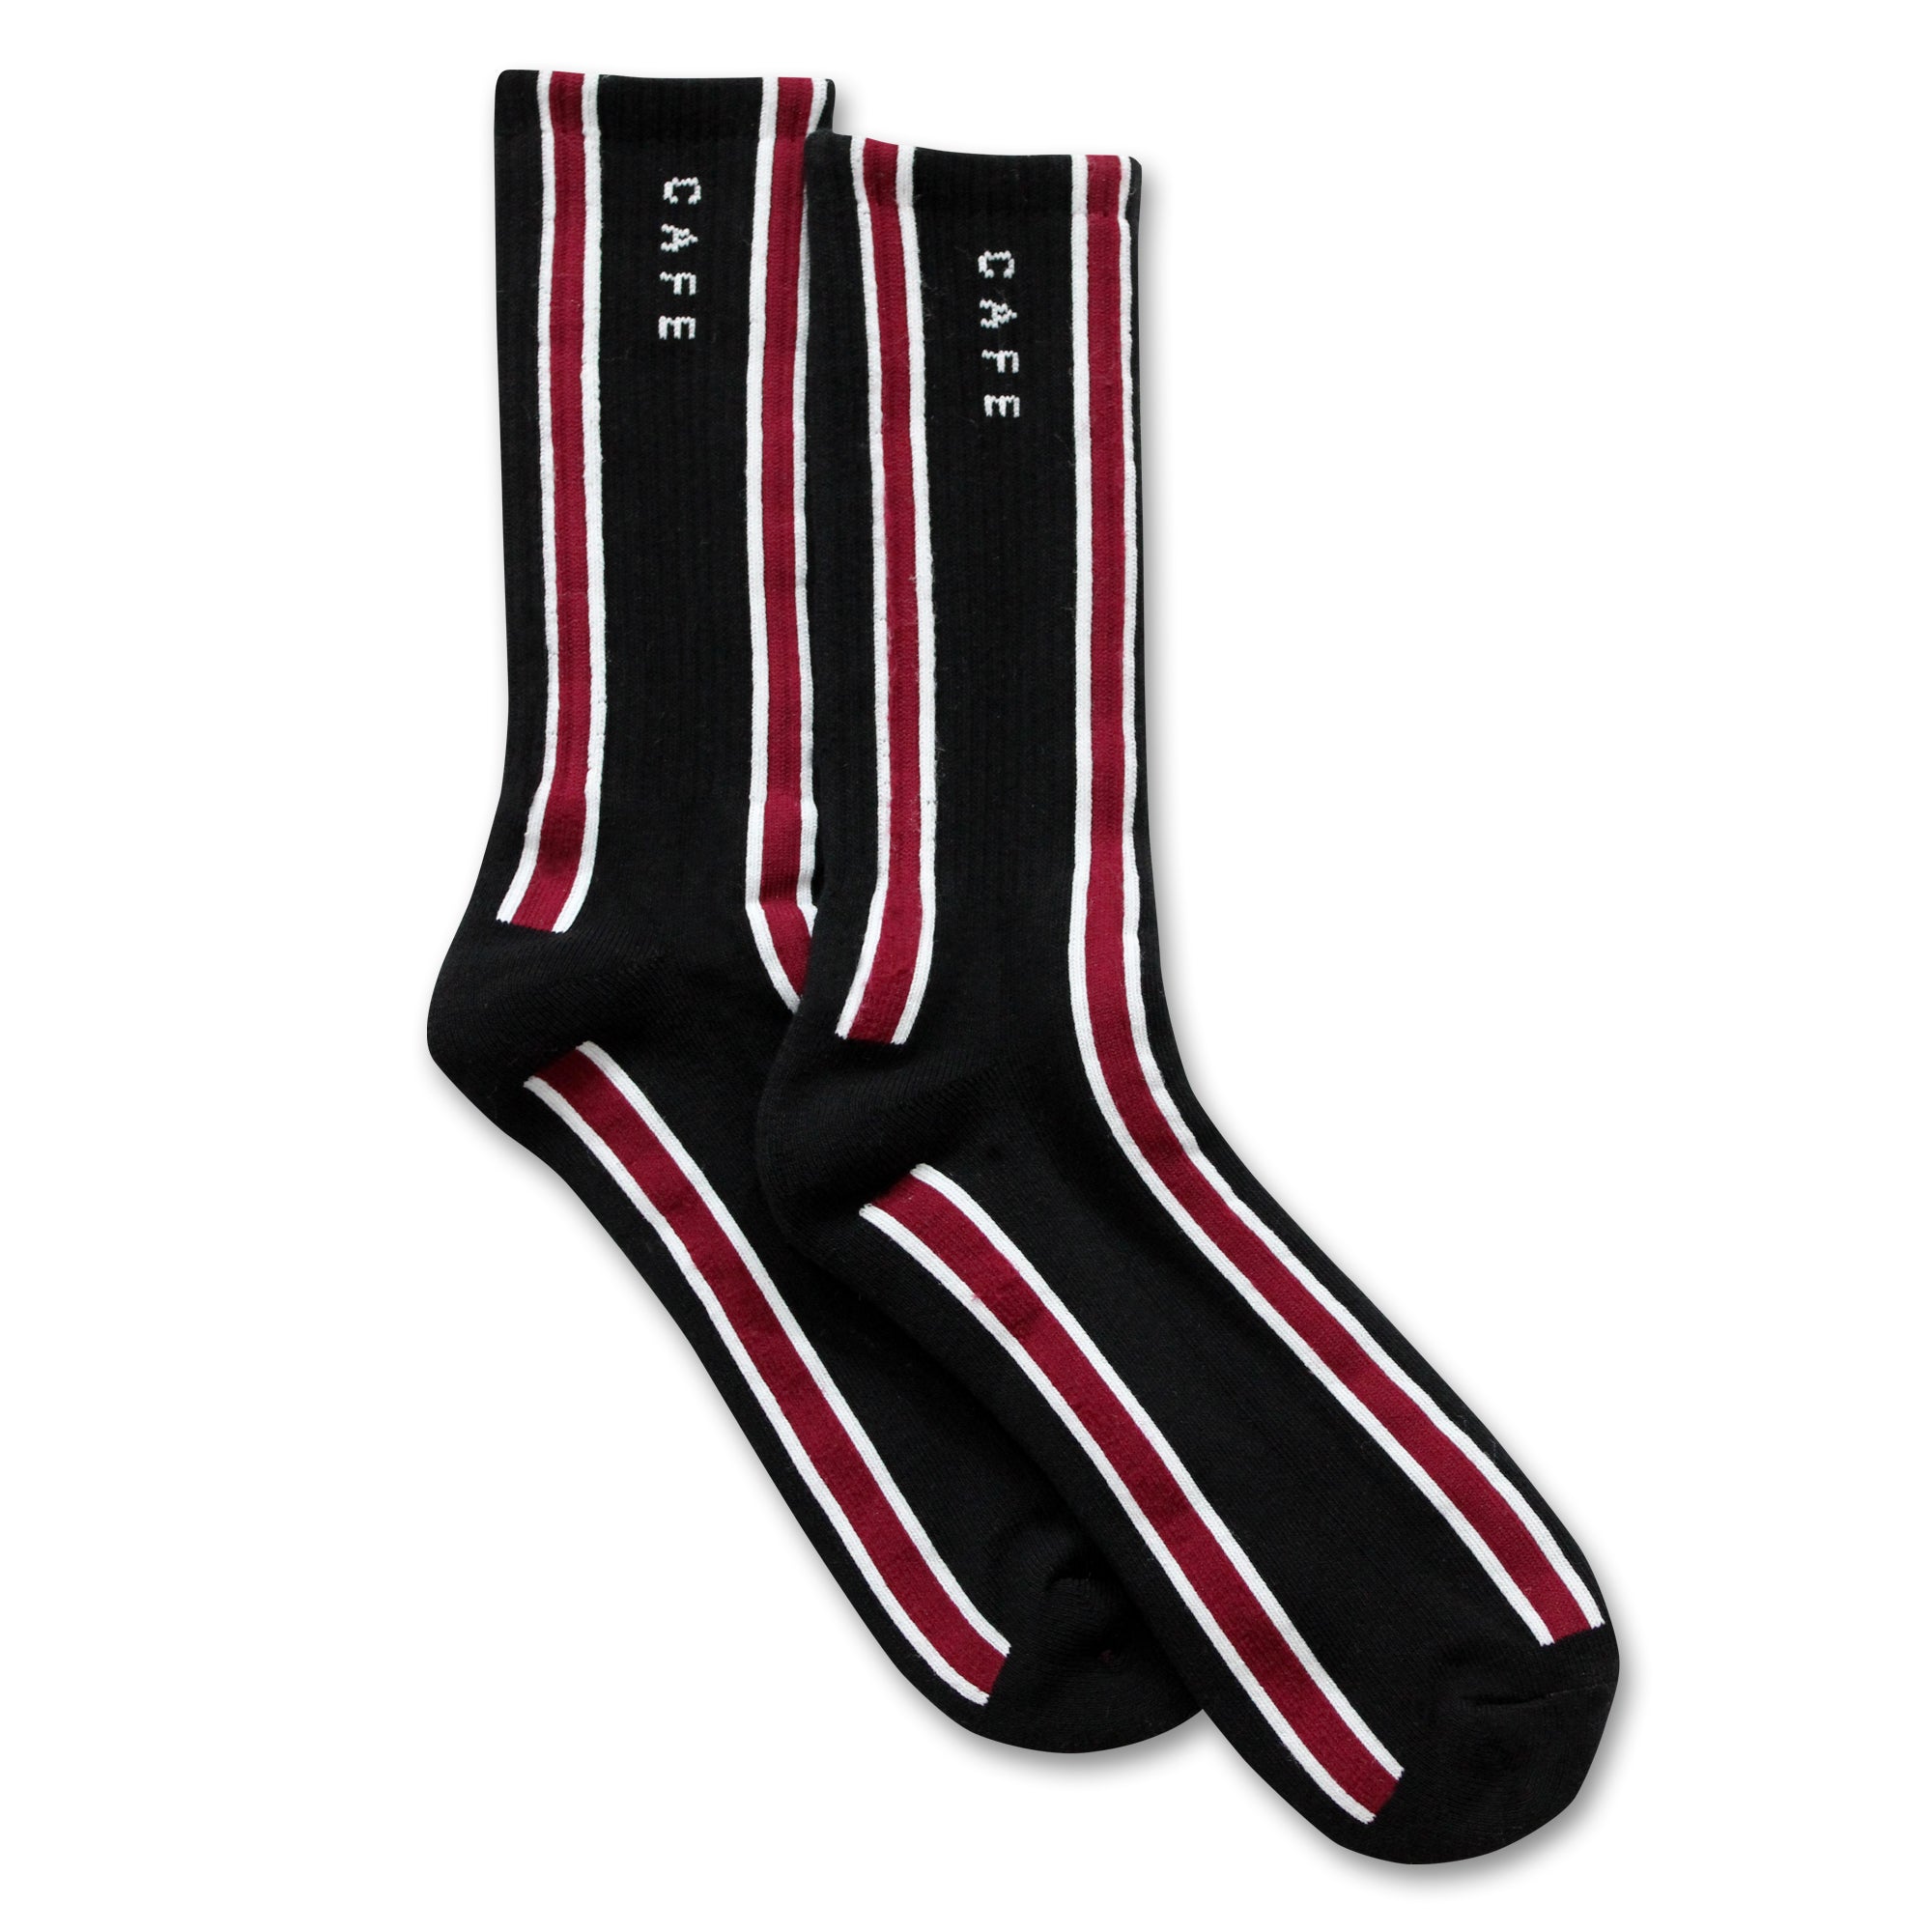 Verical Stripe Socks (Black/Burgundy/White)